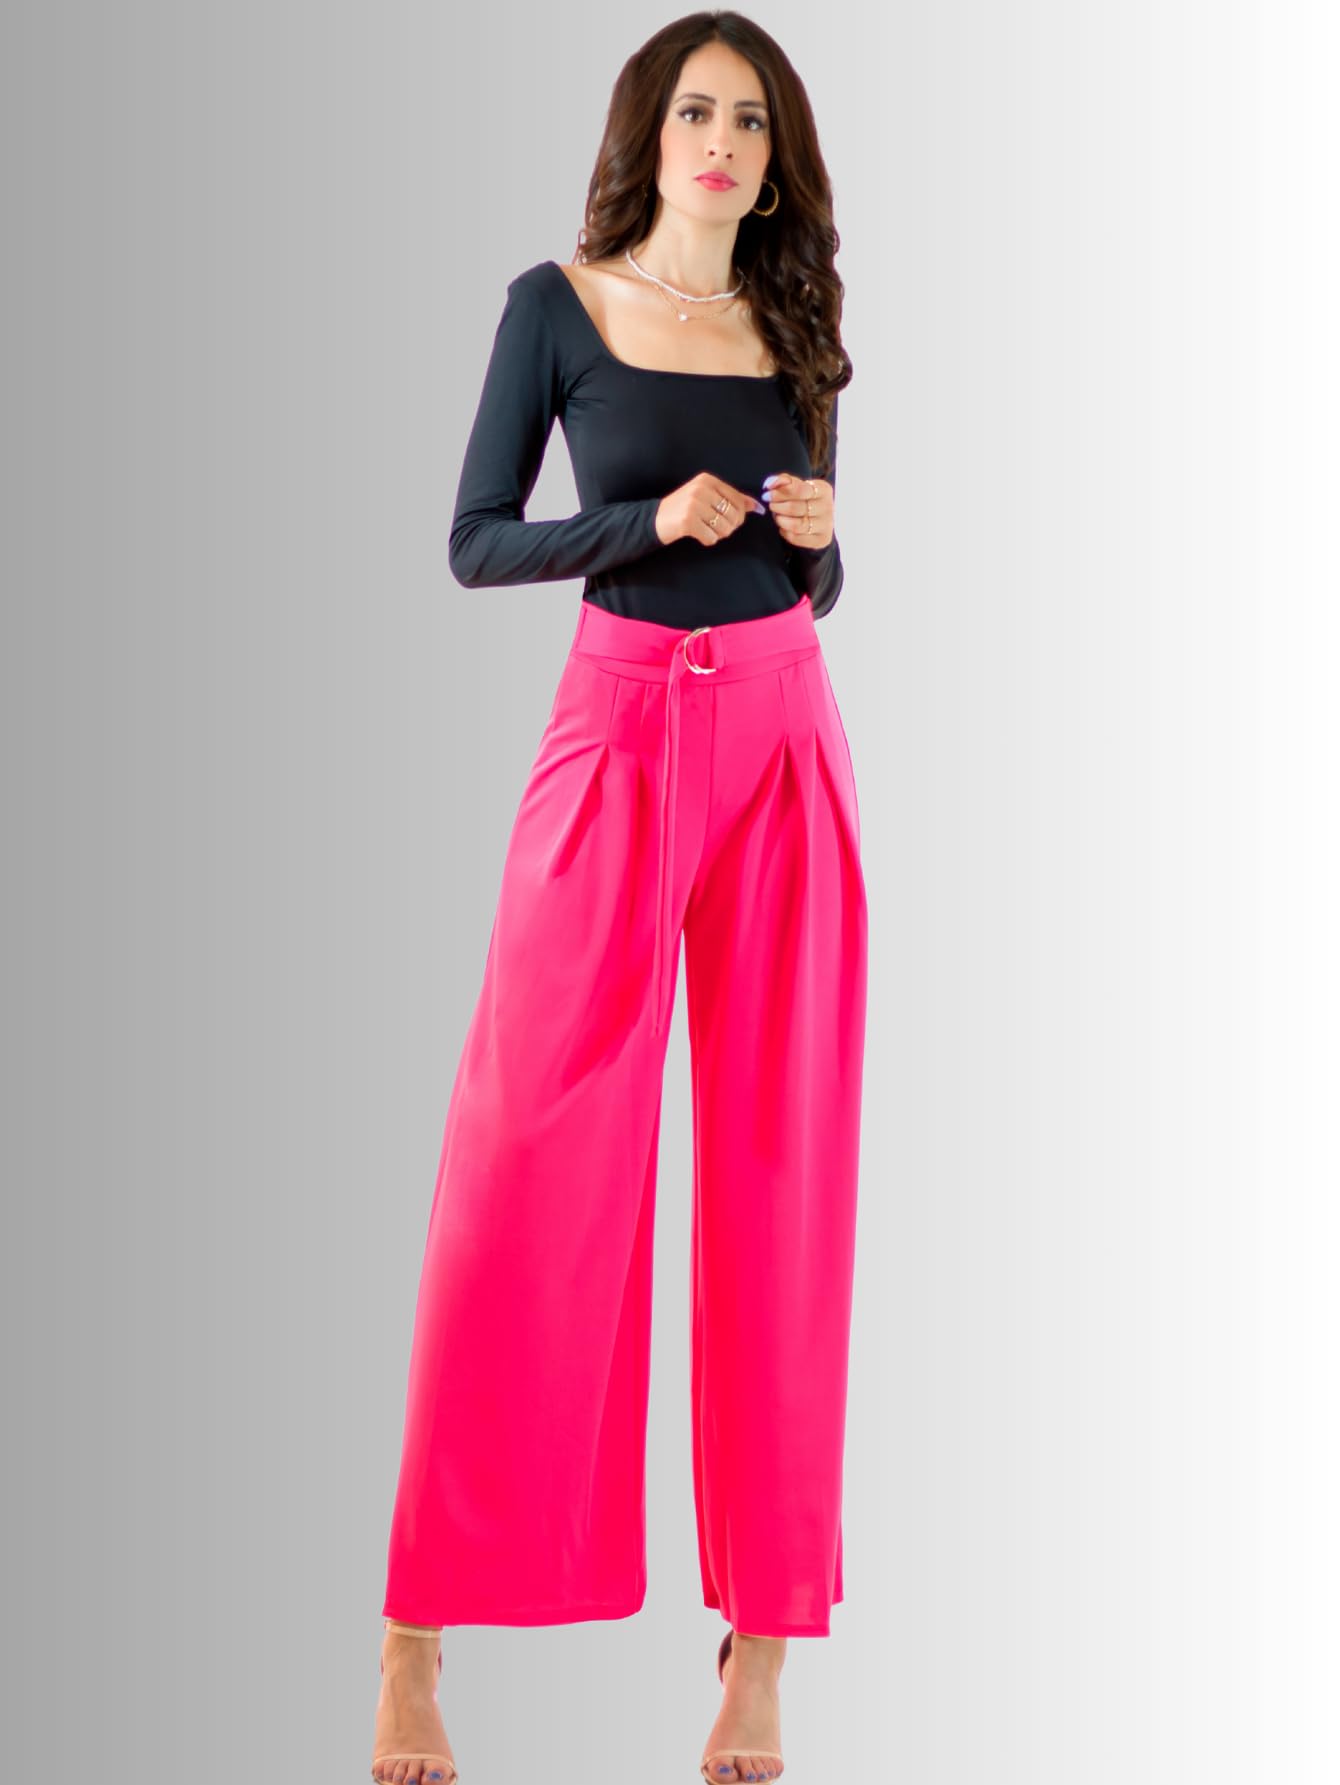 Generic Pantalones Wide Legs para Mujer (MX/US, Alfa, Talla única, Regular, Regular, Fucsia)